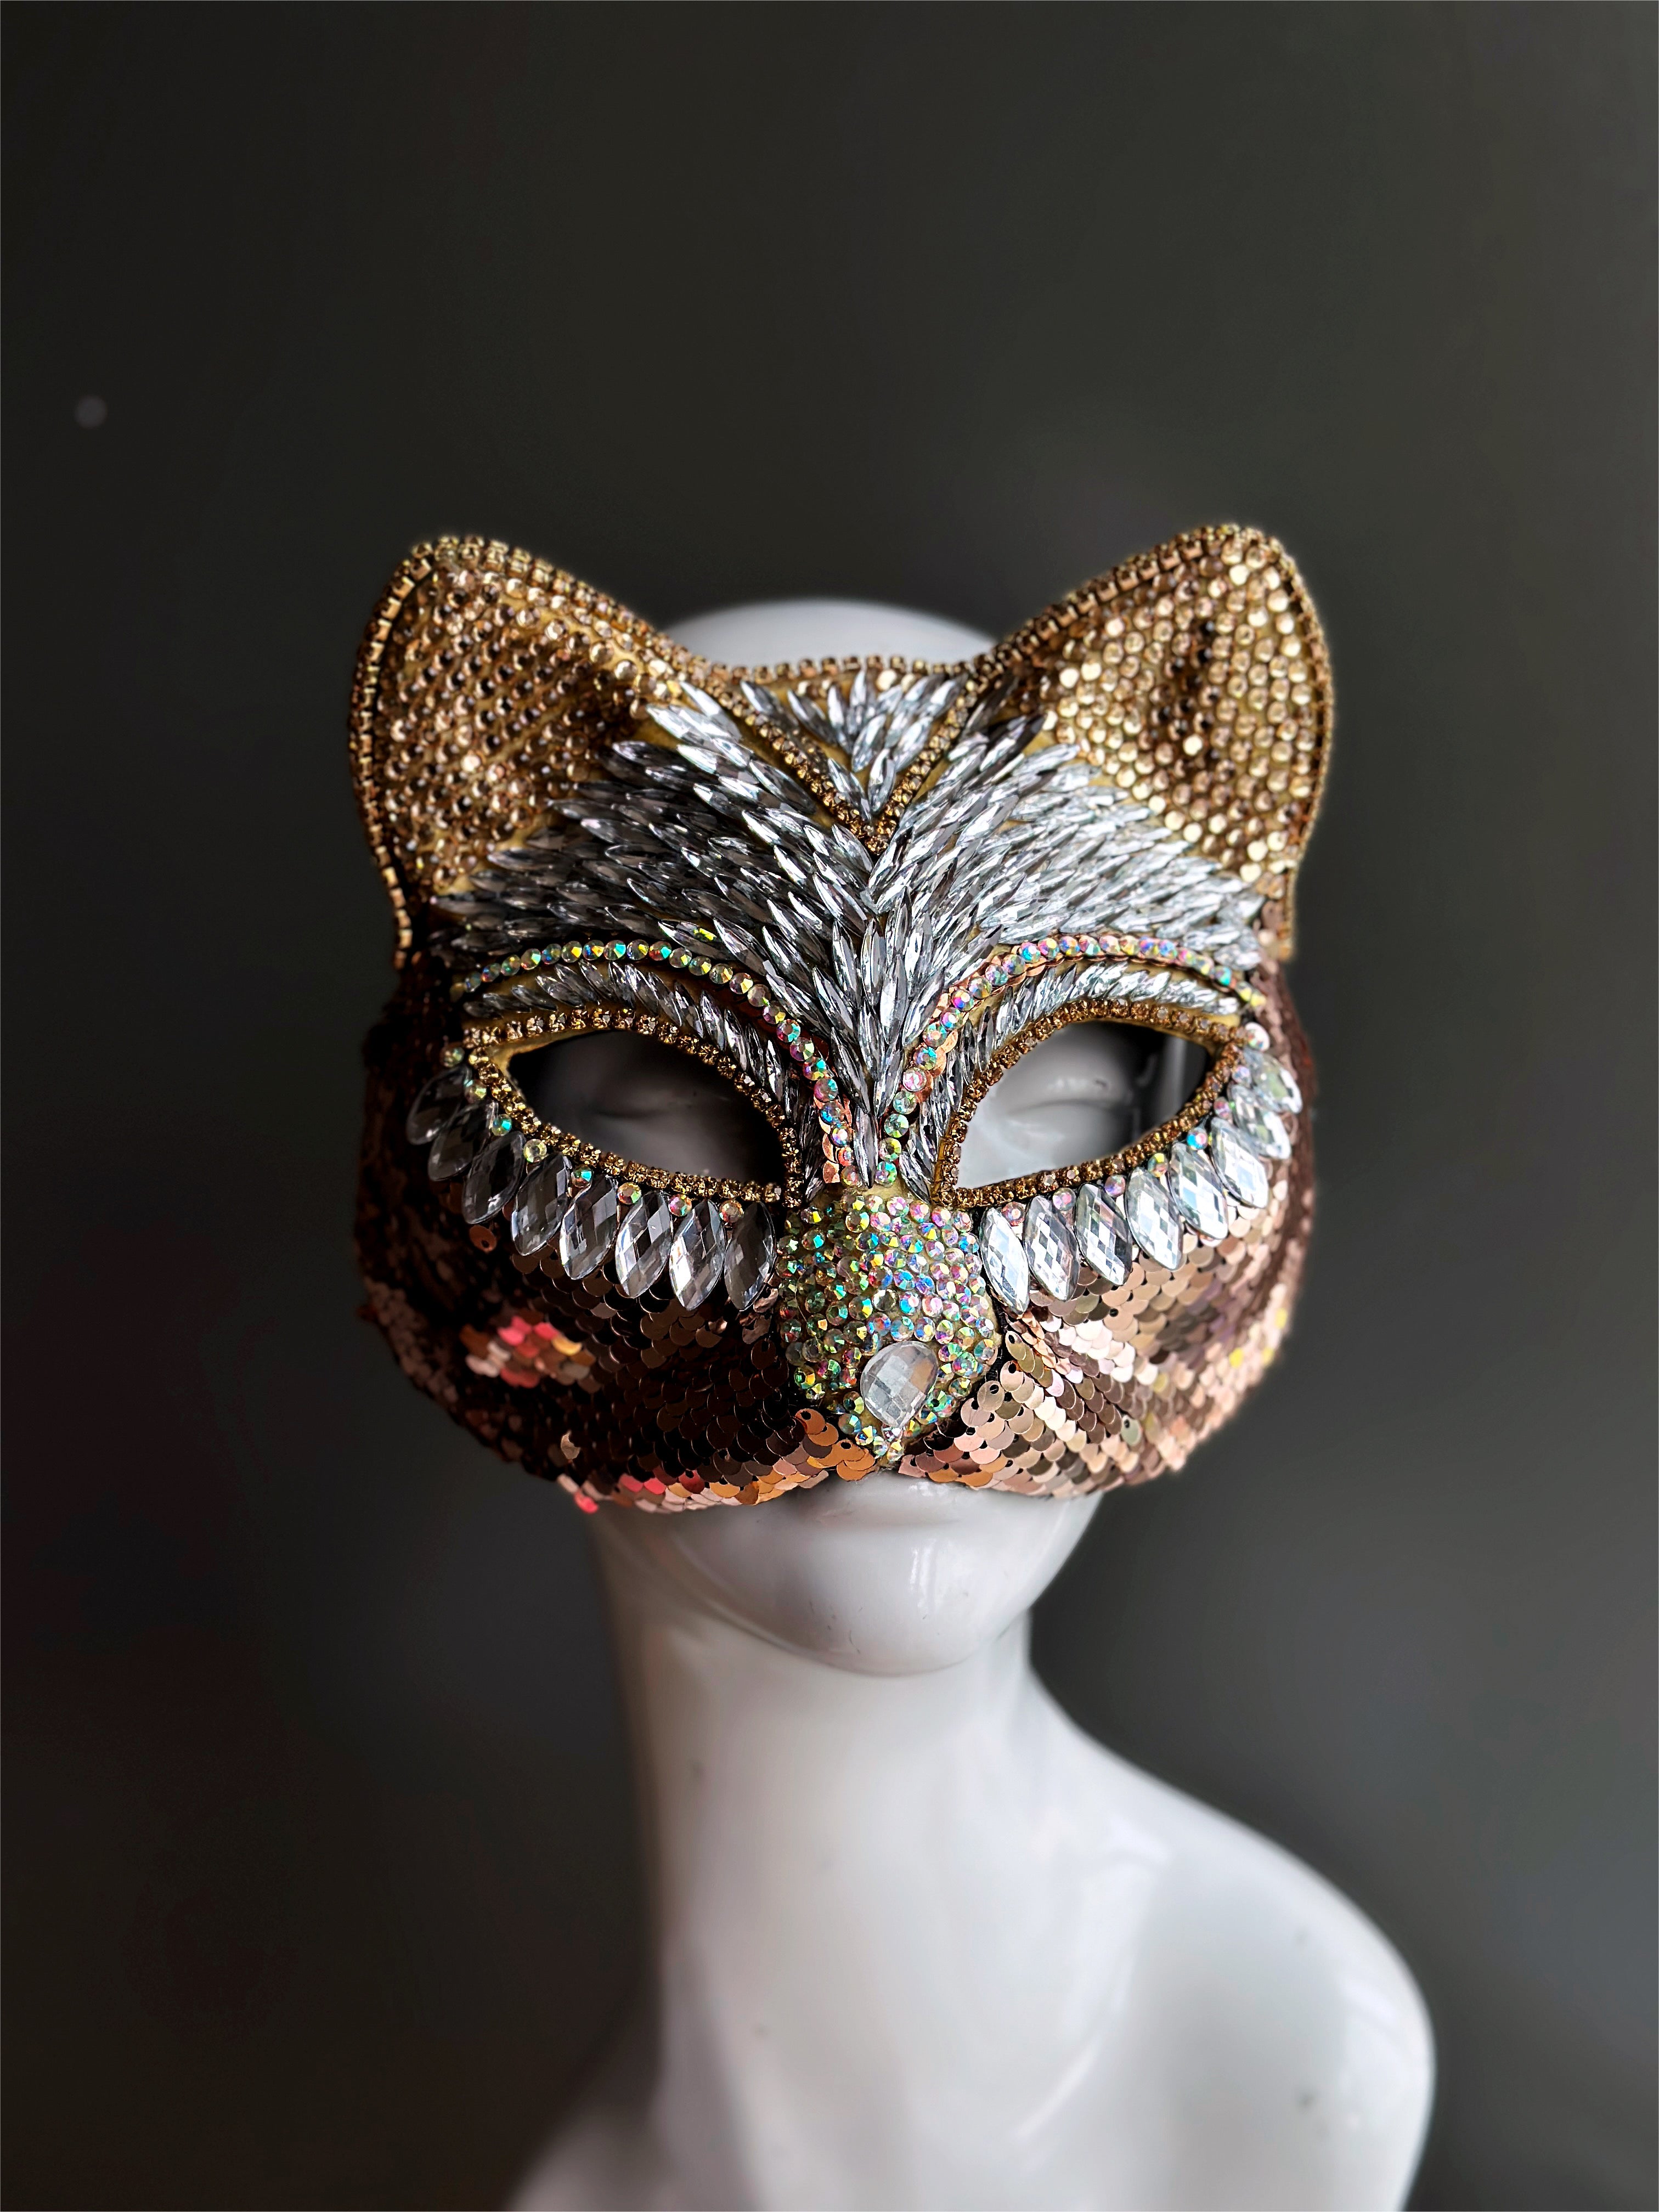 Venetian blank cat mask type A (Gatto A)